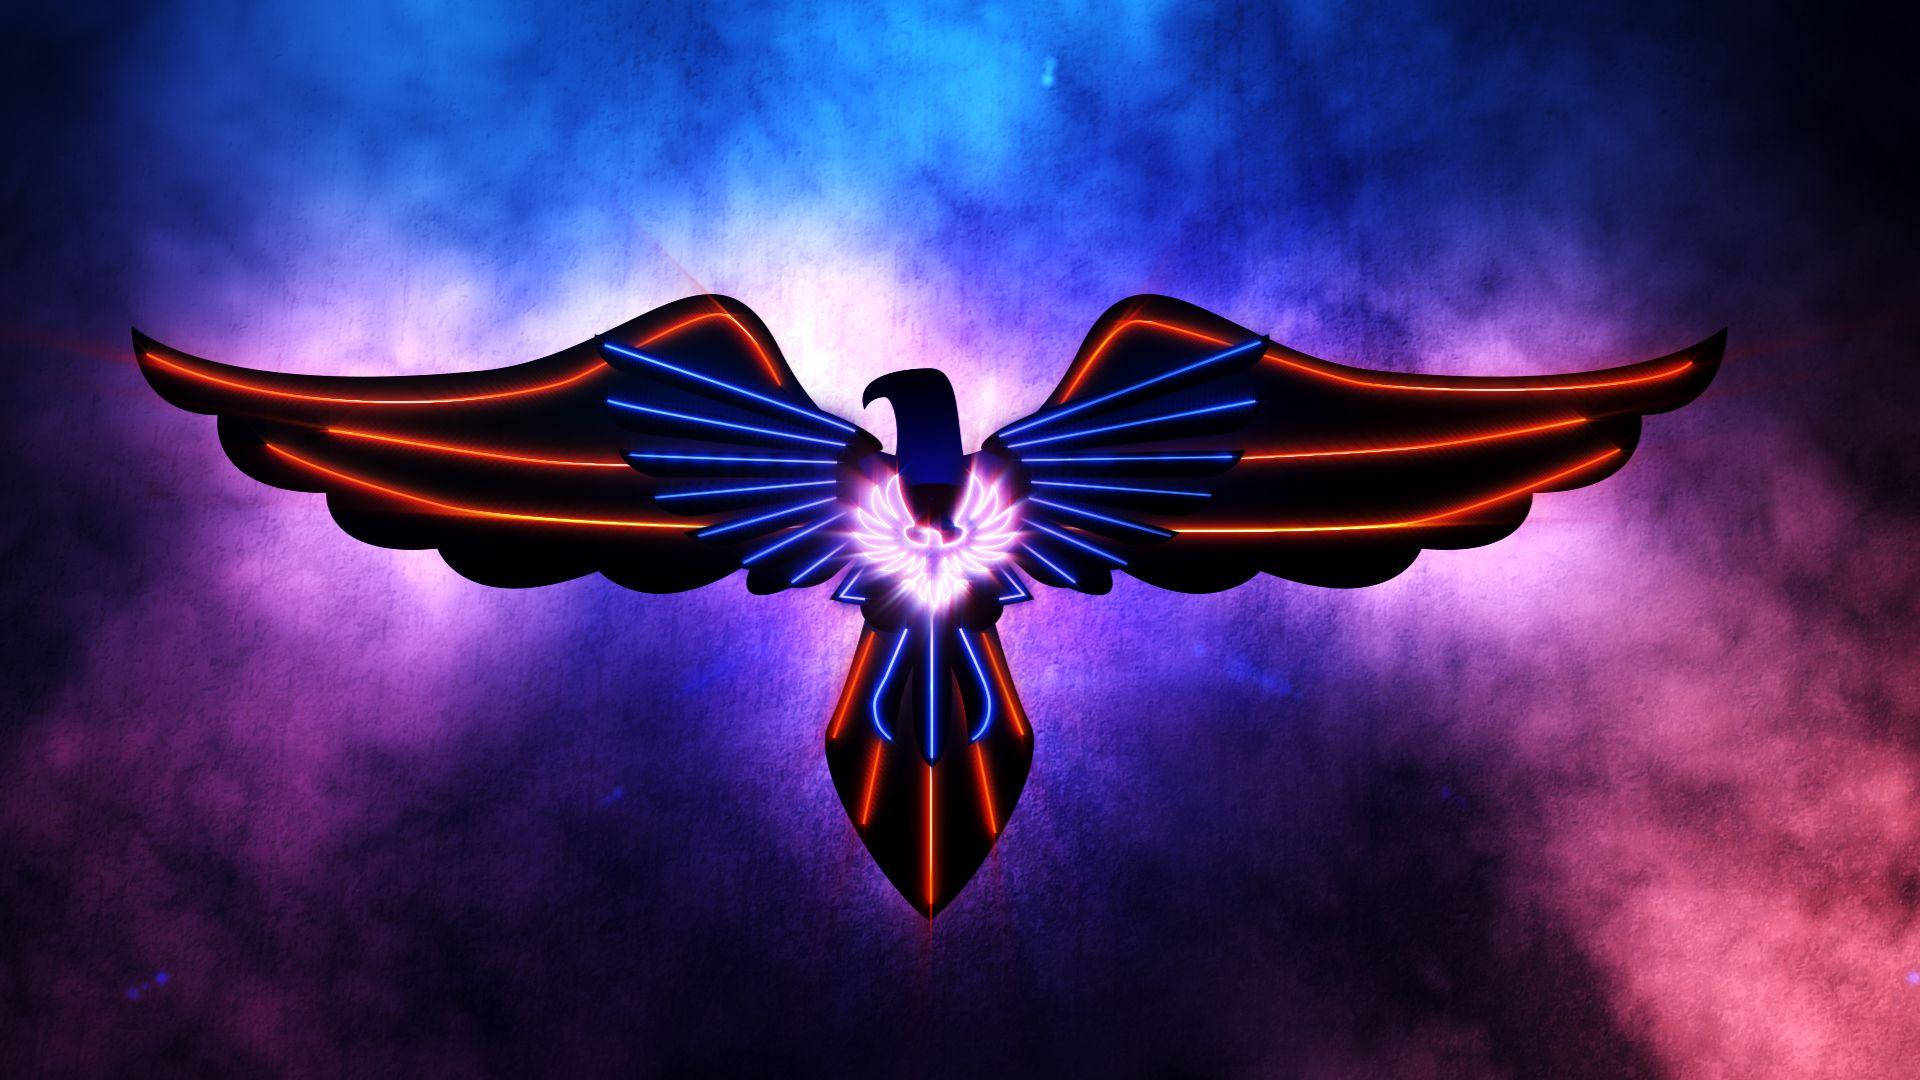 Neon Phoenix Symbol From American Gods Series Background